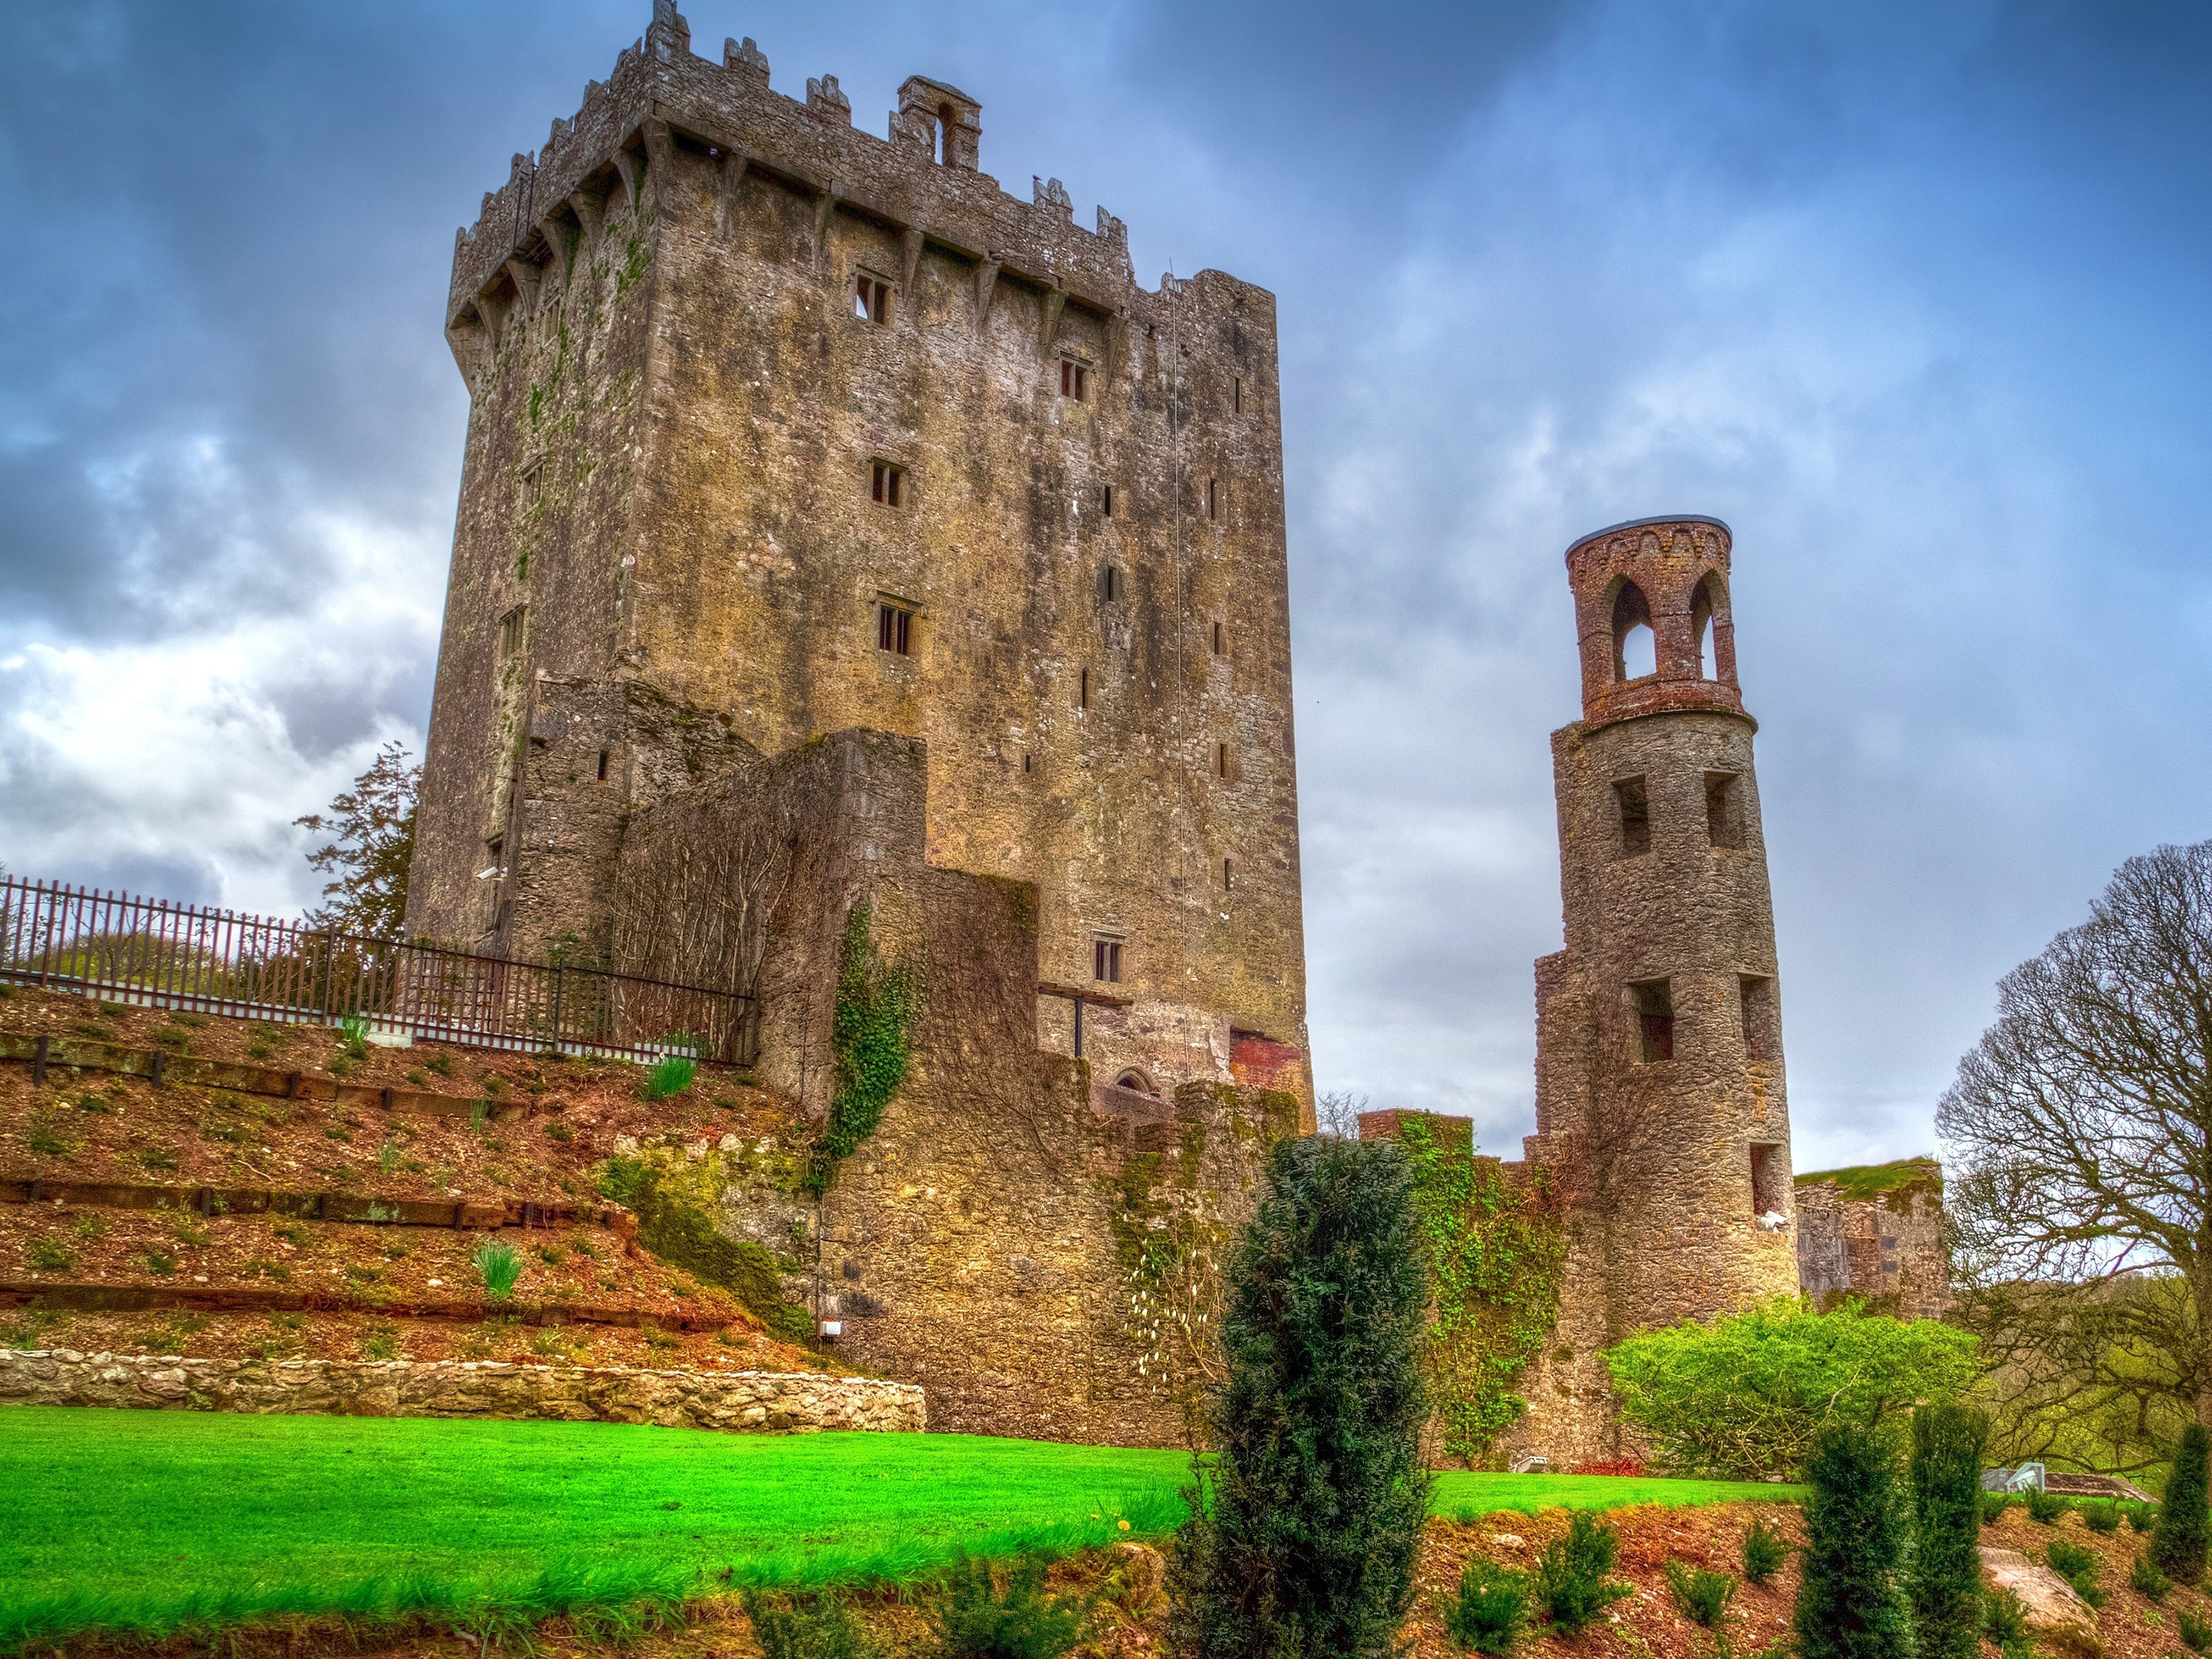 1. Tour the Castles of Ireland